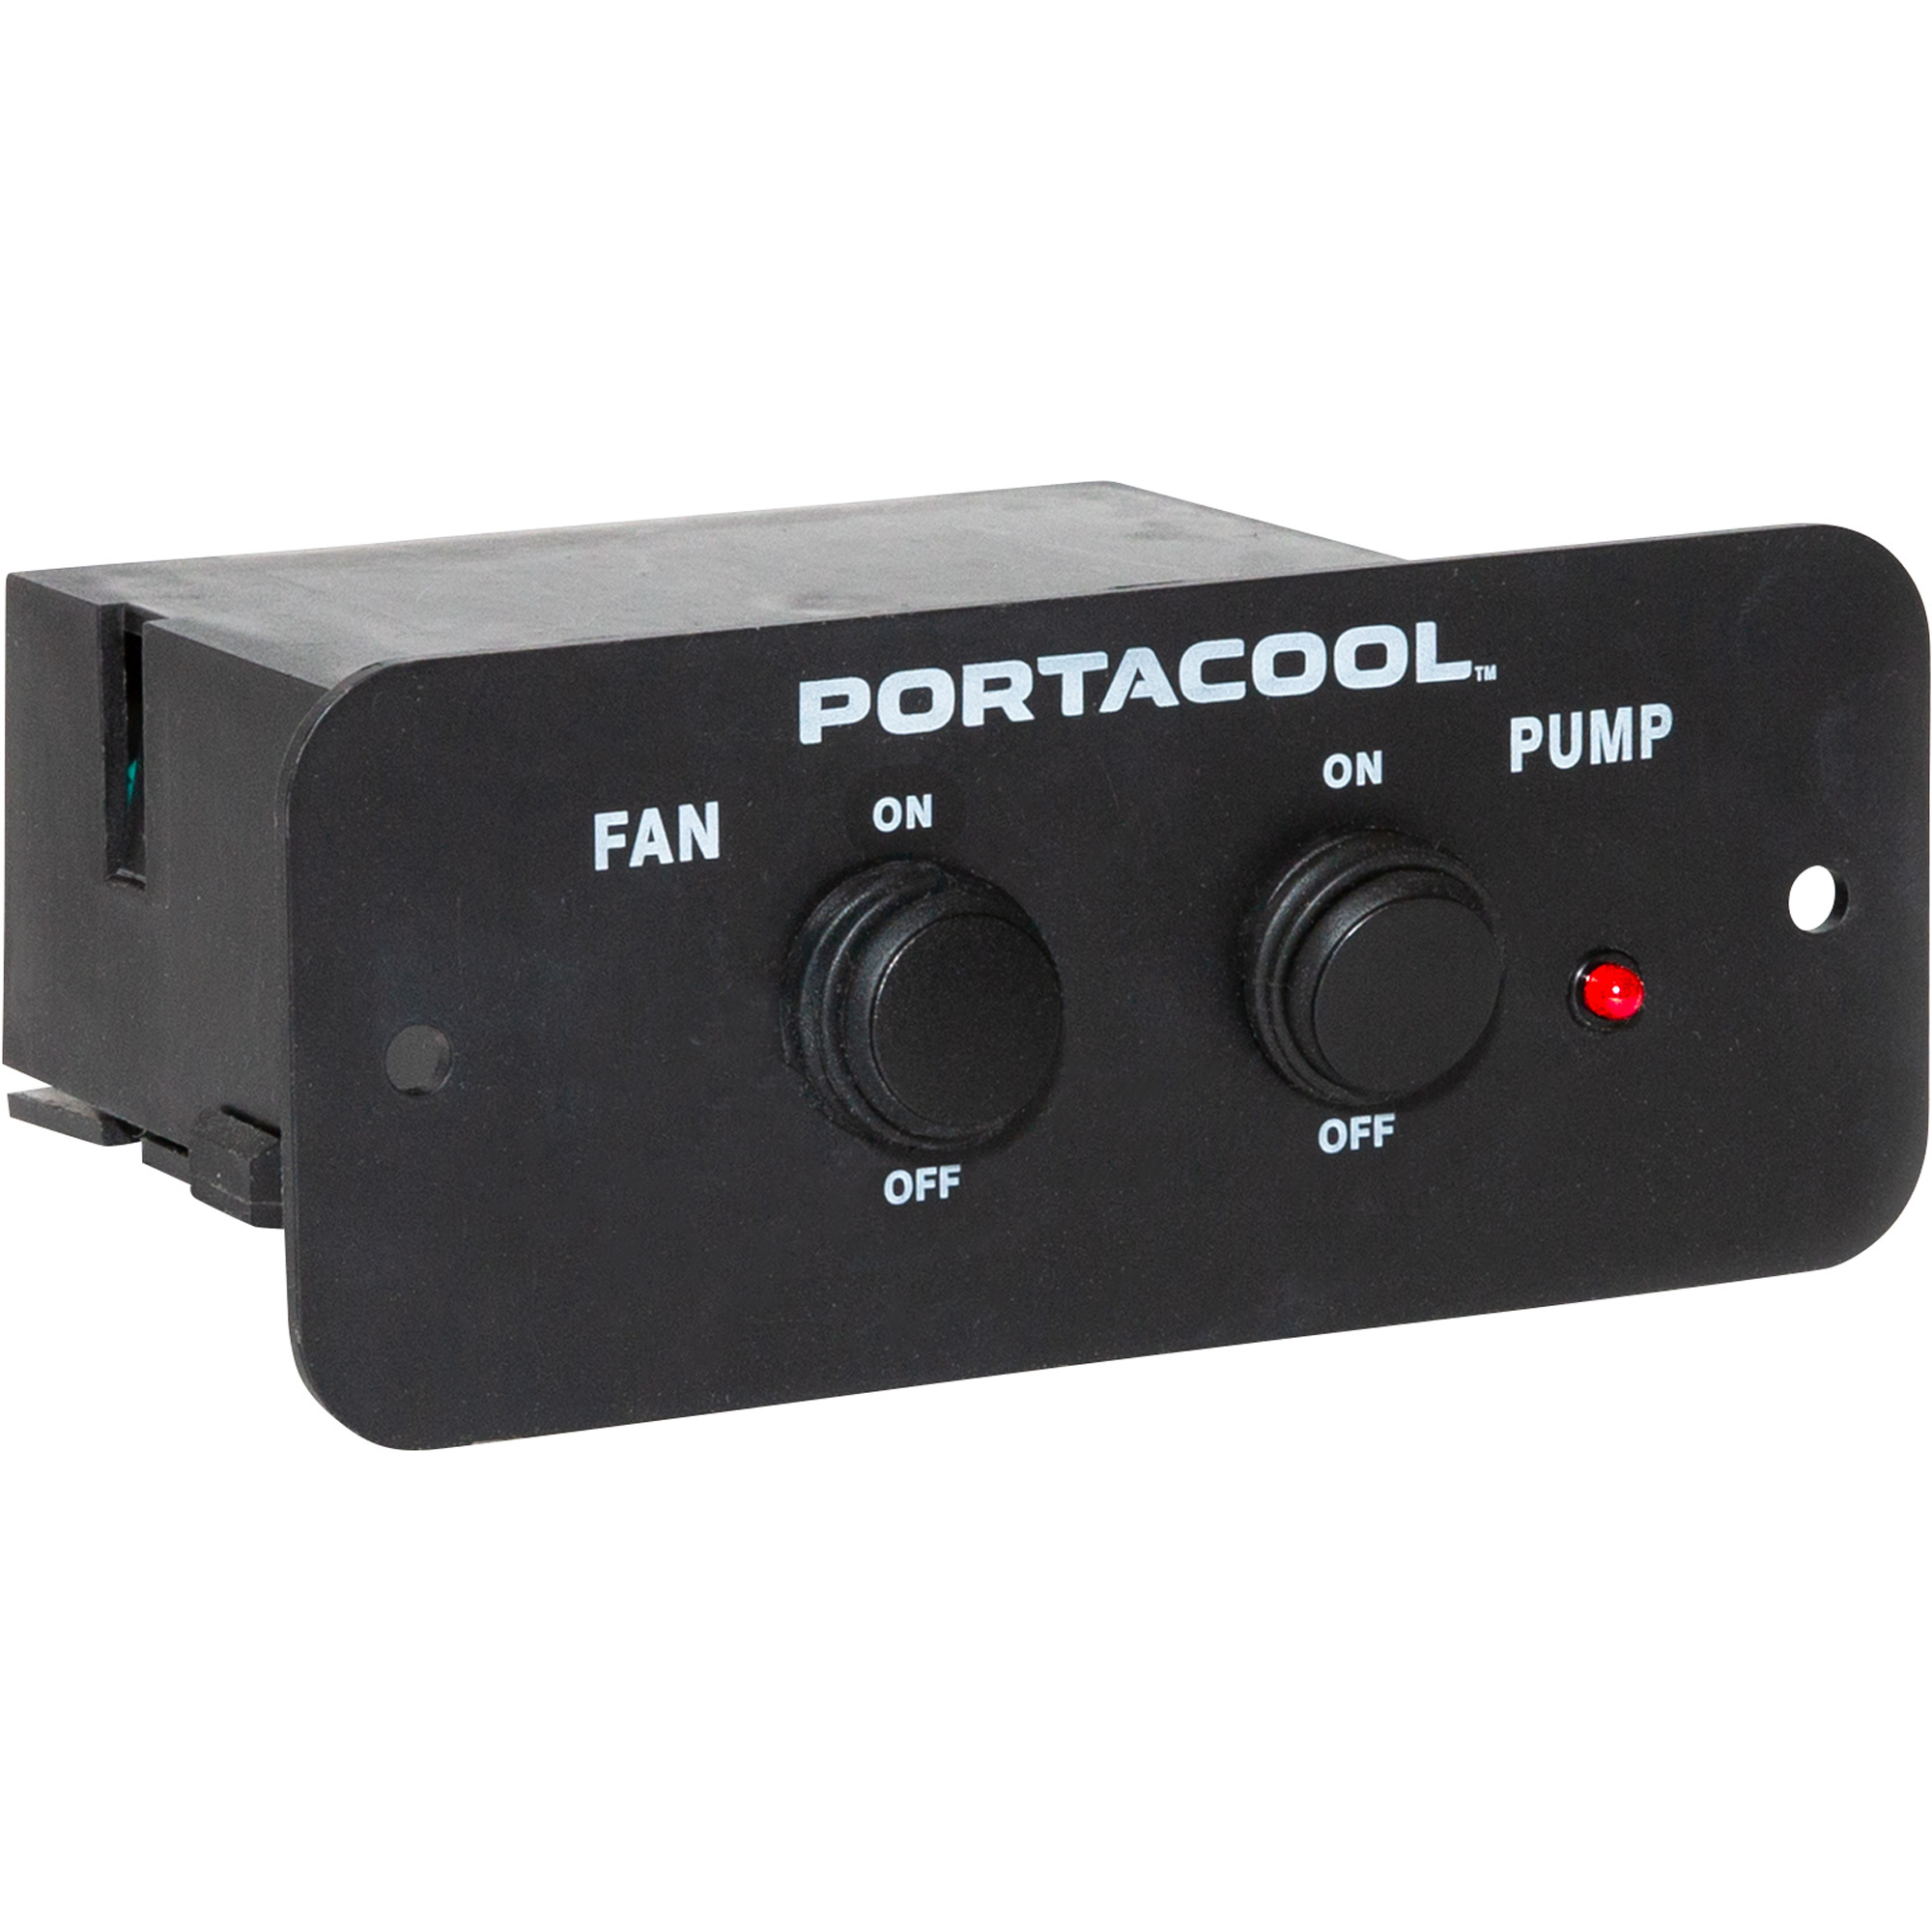 Portacool Control Switch â Fits Cyclone 160, Model PARCTLCY160A